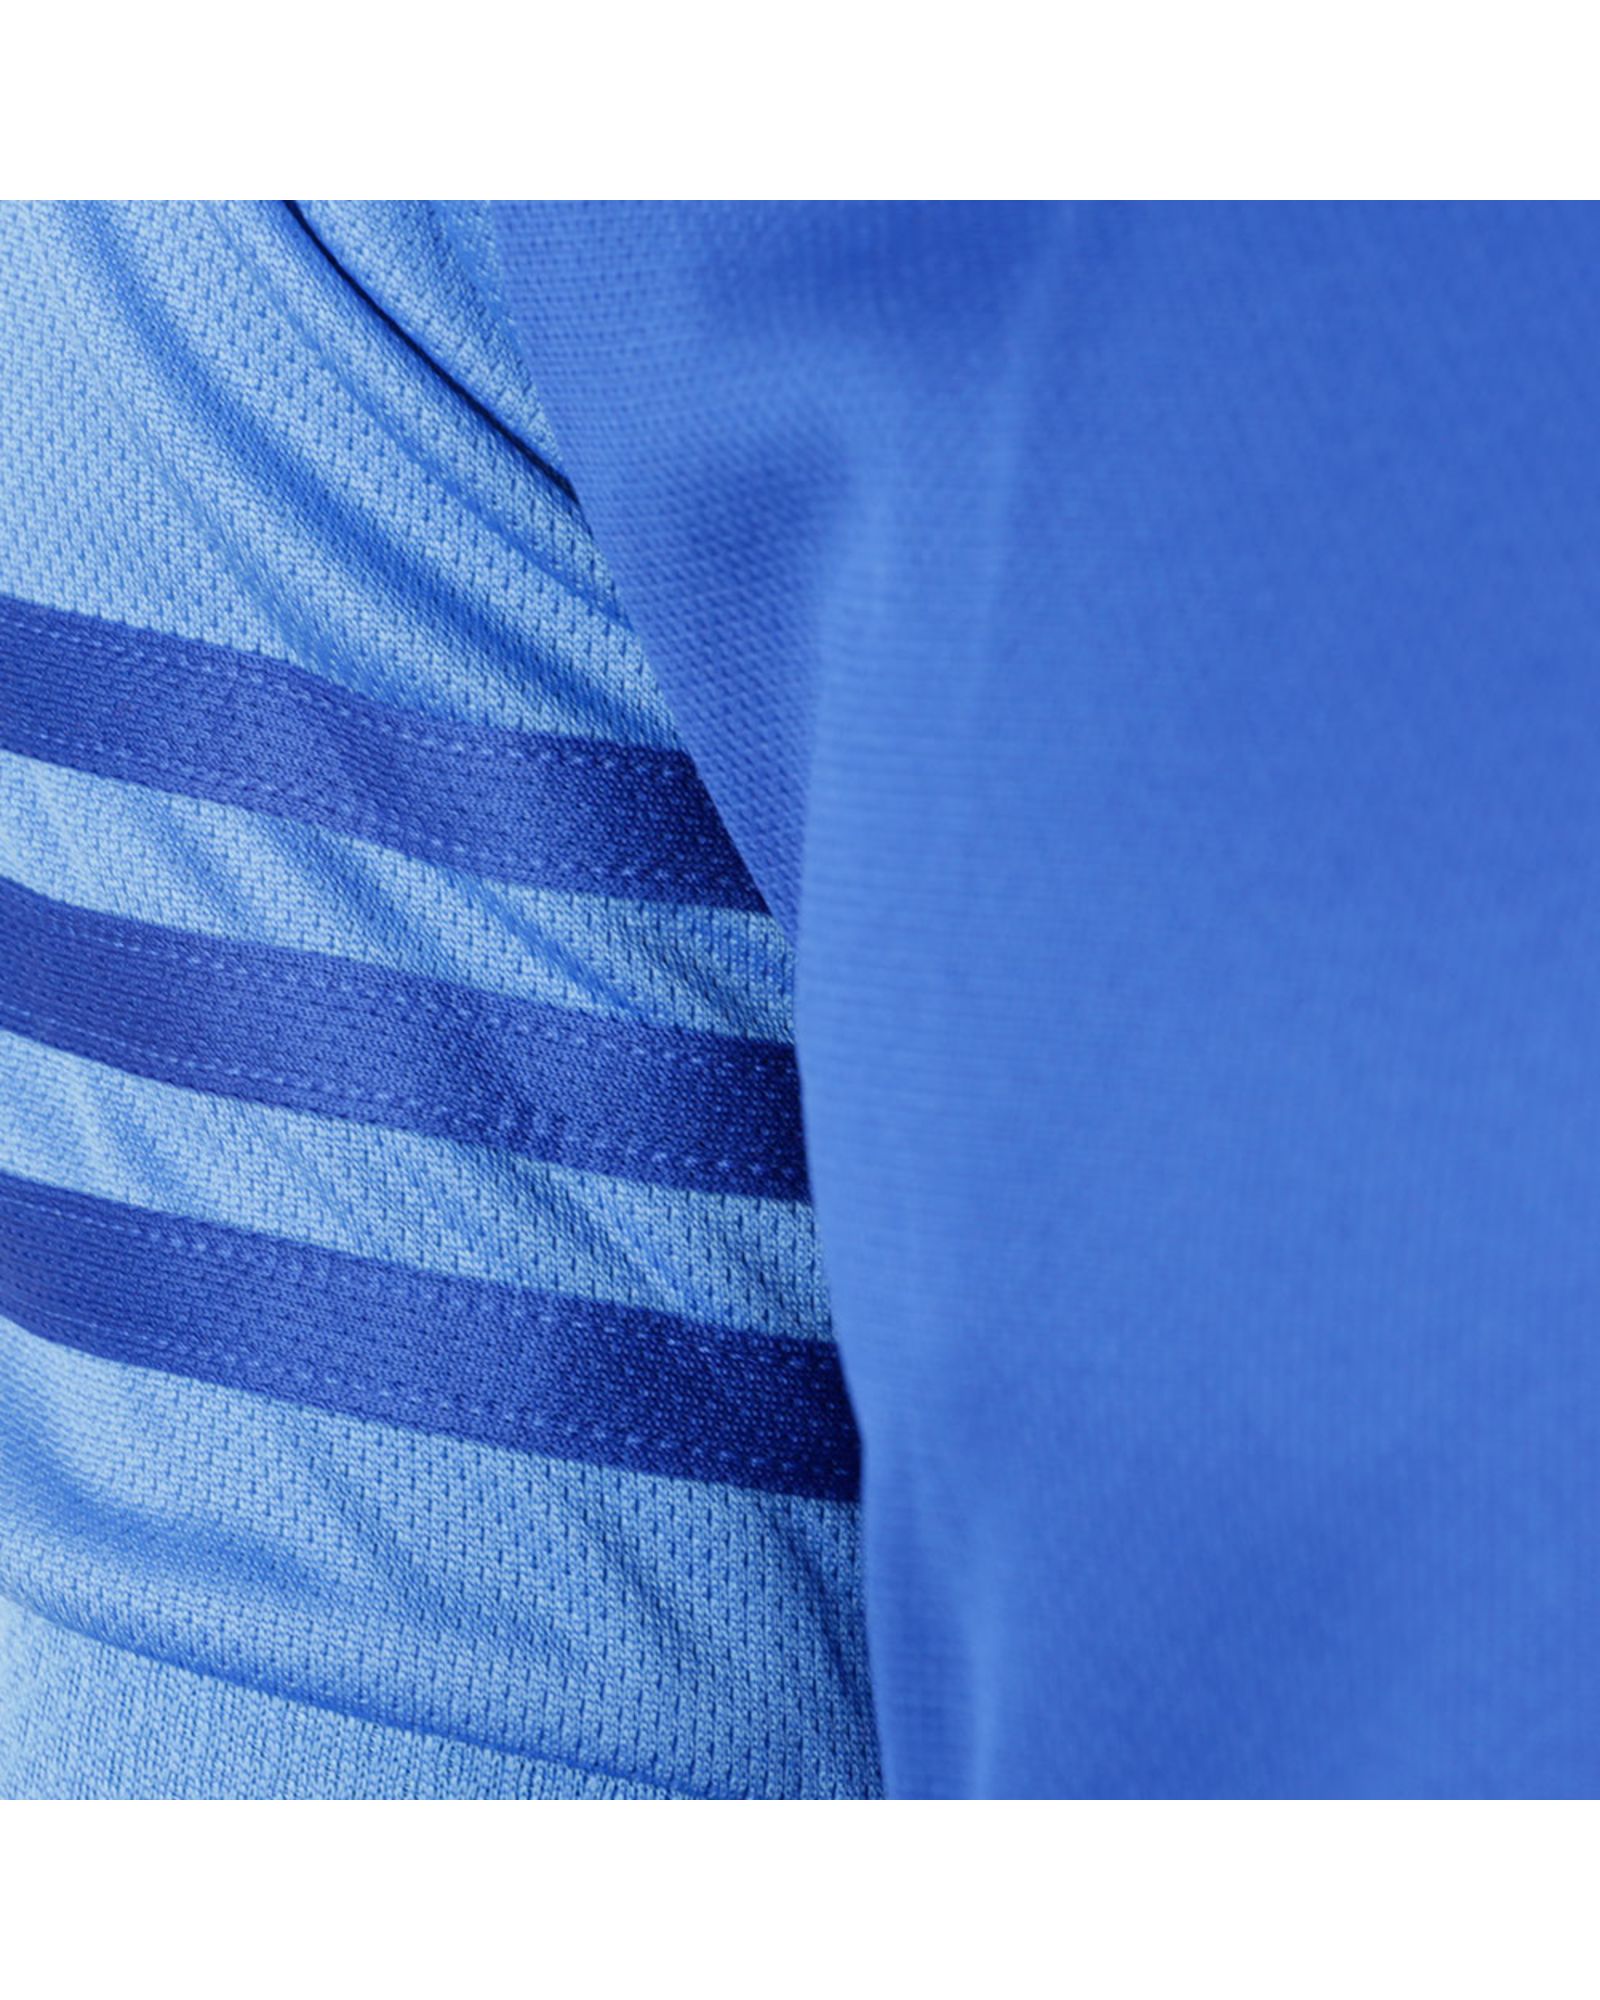 Camiseta de Running Response Manga Larga Azul - Fútbol Factory